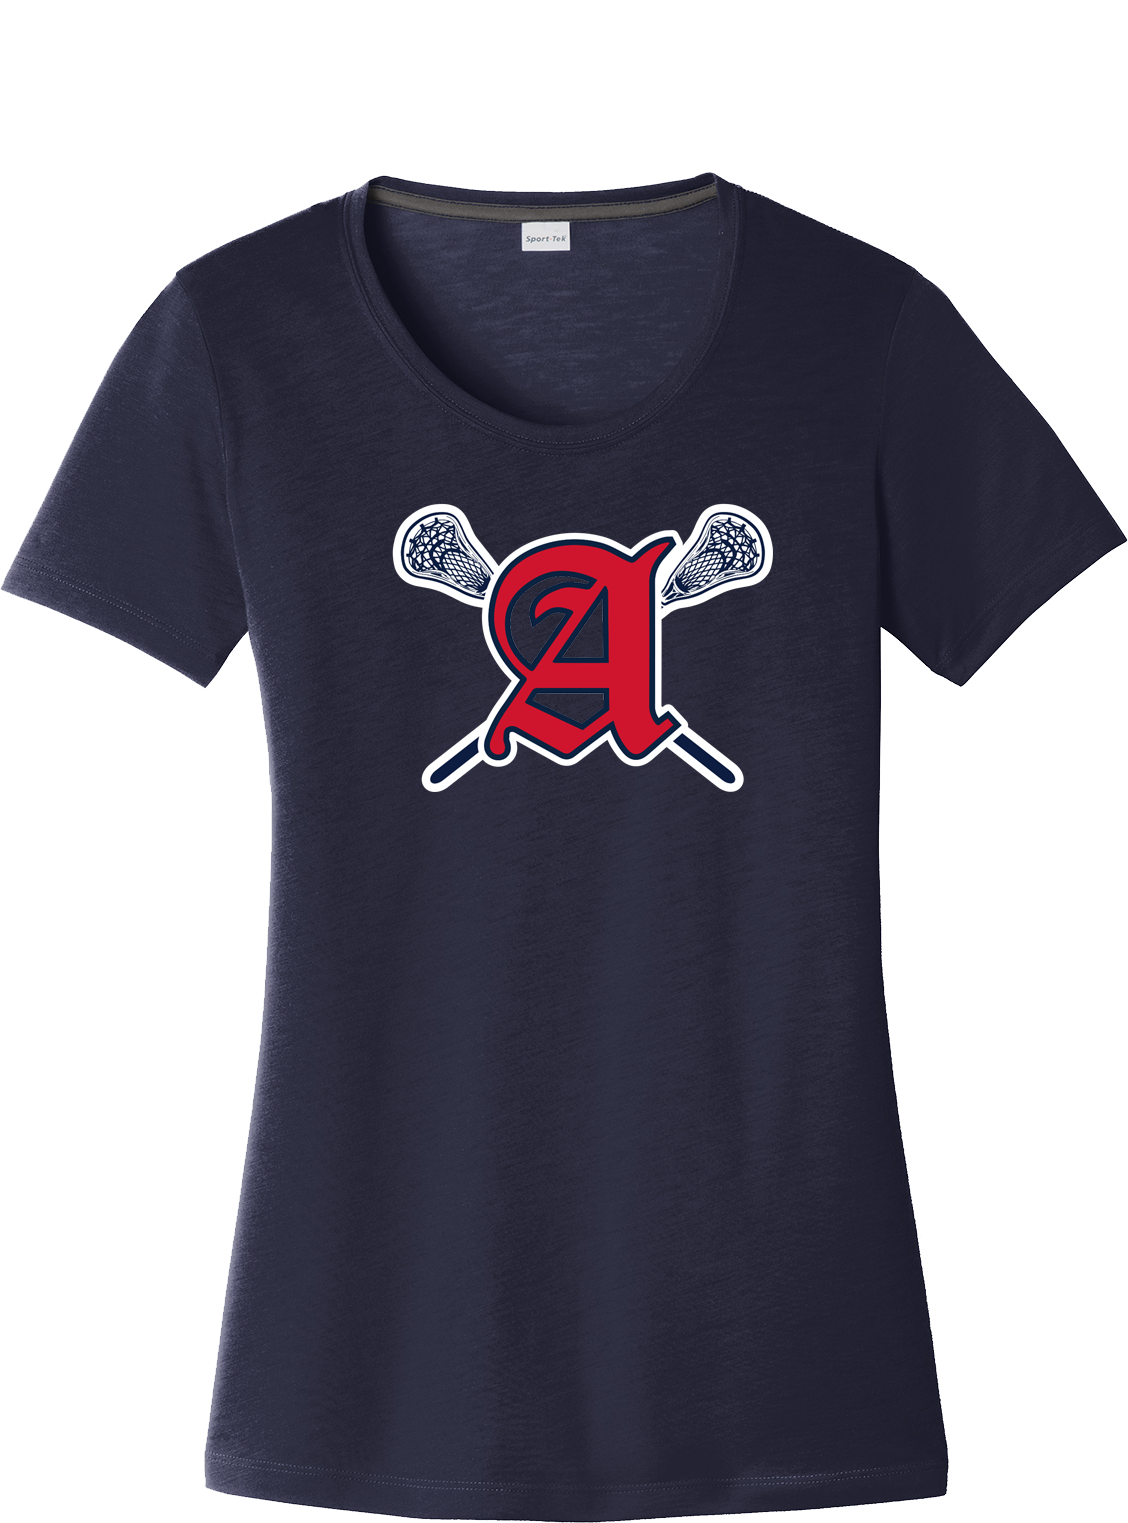 Augusta Patriots Women's Navy CottonTouch Performance T-Shirt